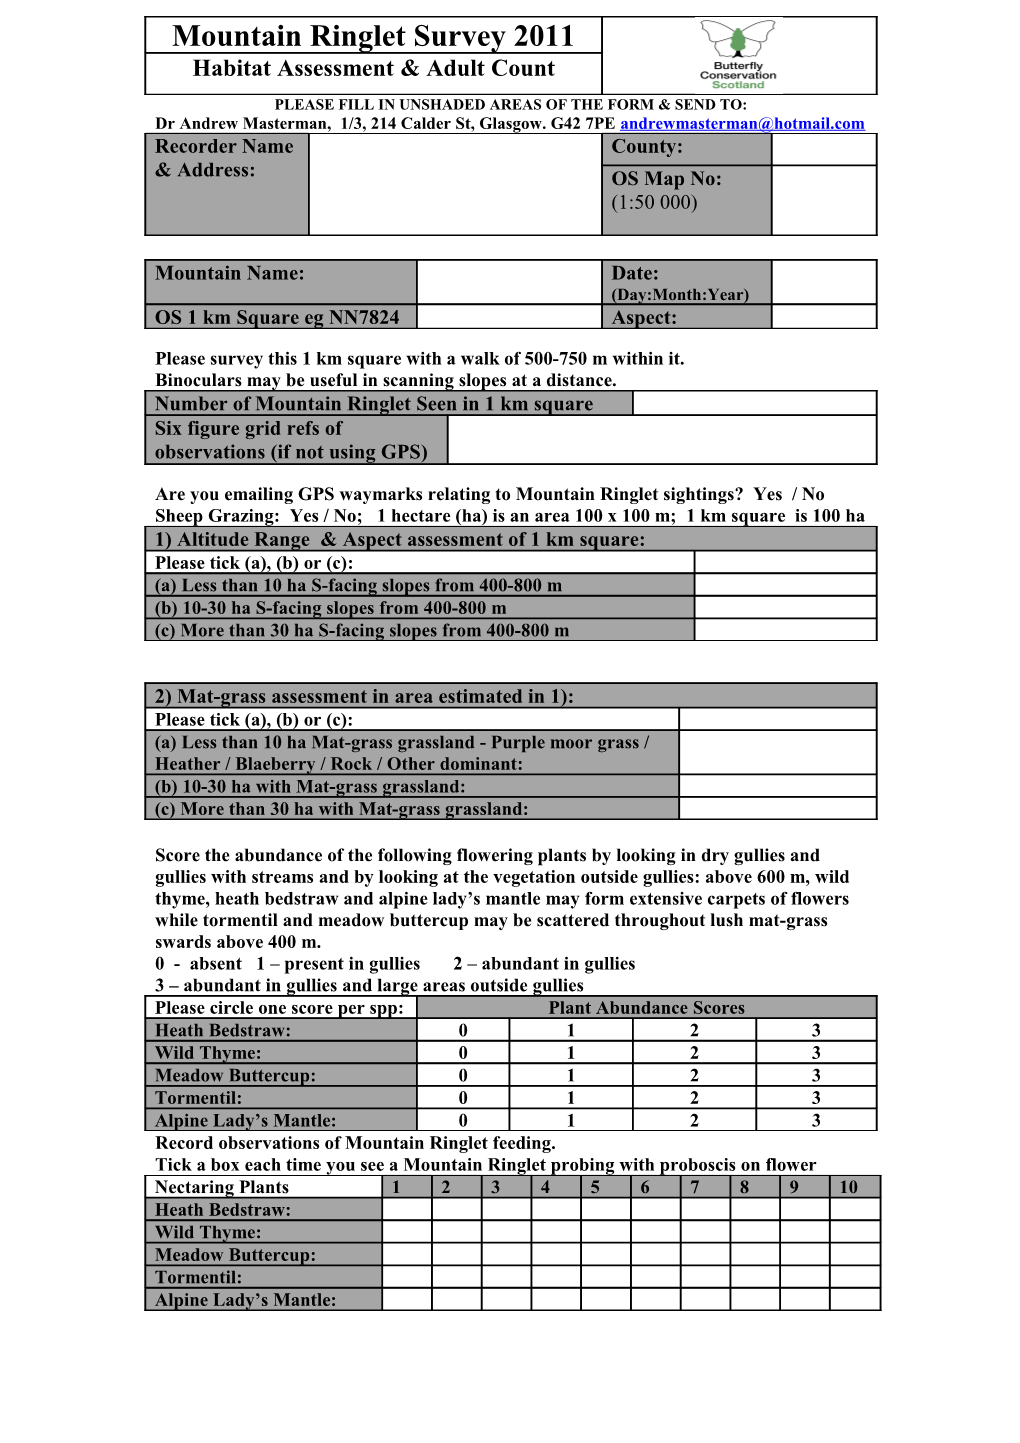 Mountain Ringlet Habitat Survey Form